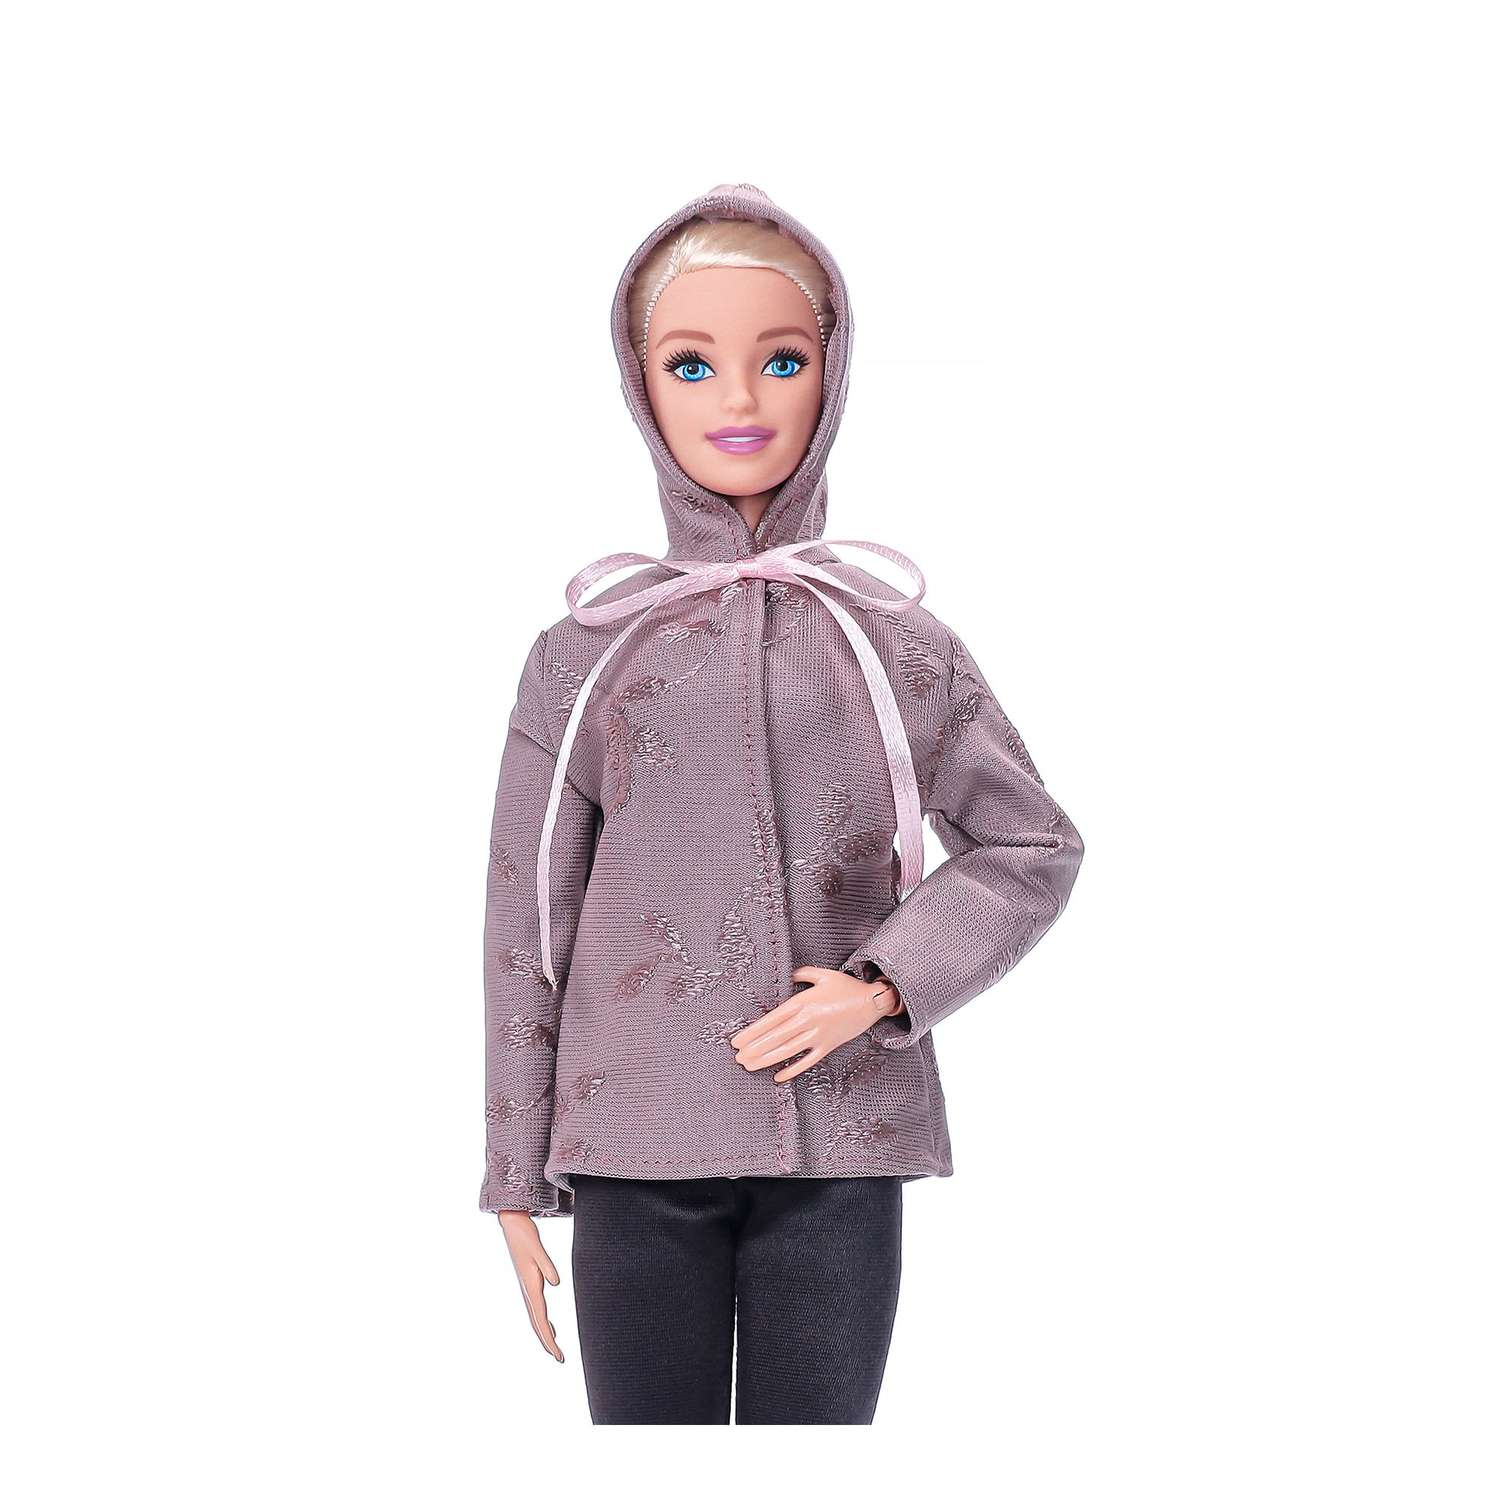 Одежда для кукол типа Барби VIANA Набор из 4х предметов 128.20.9 шоколад 128.20.9 - фото 3